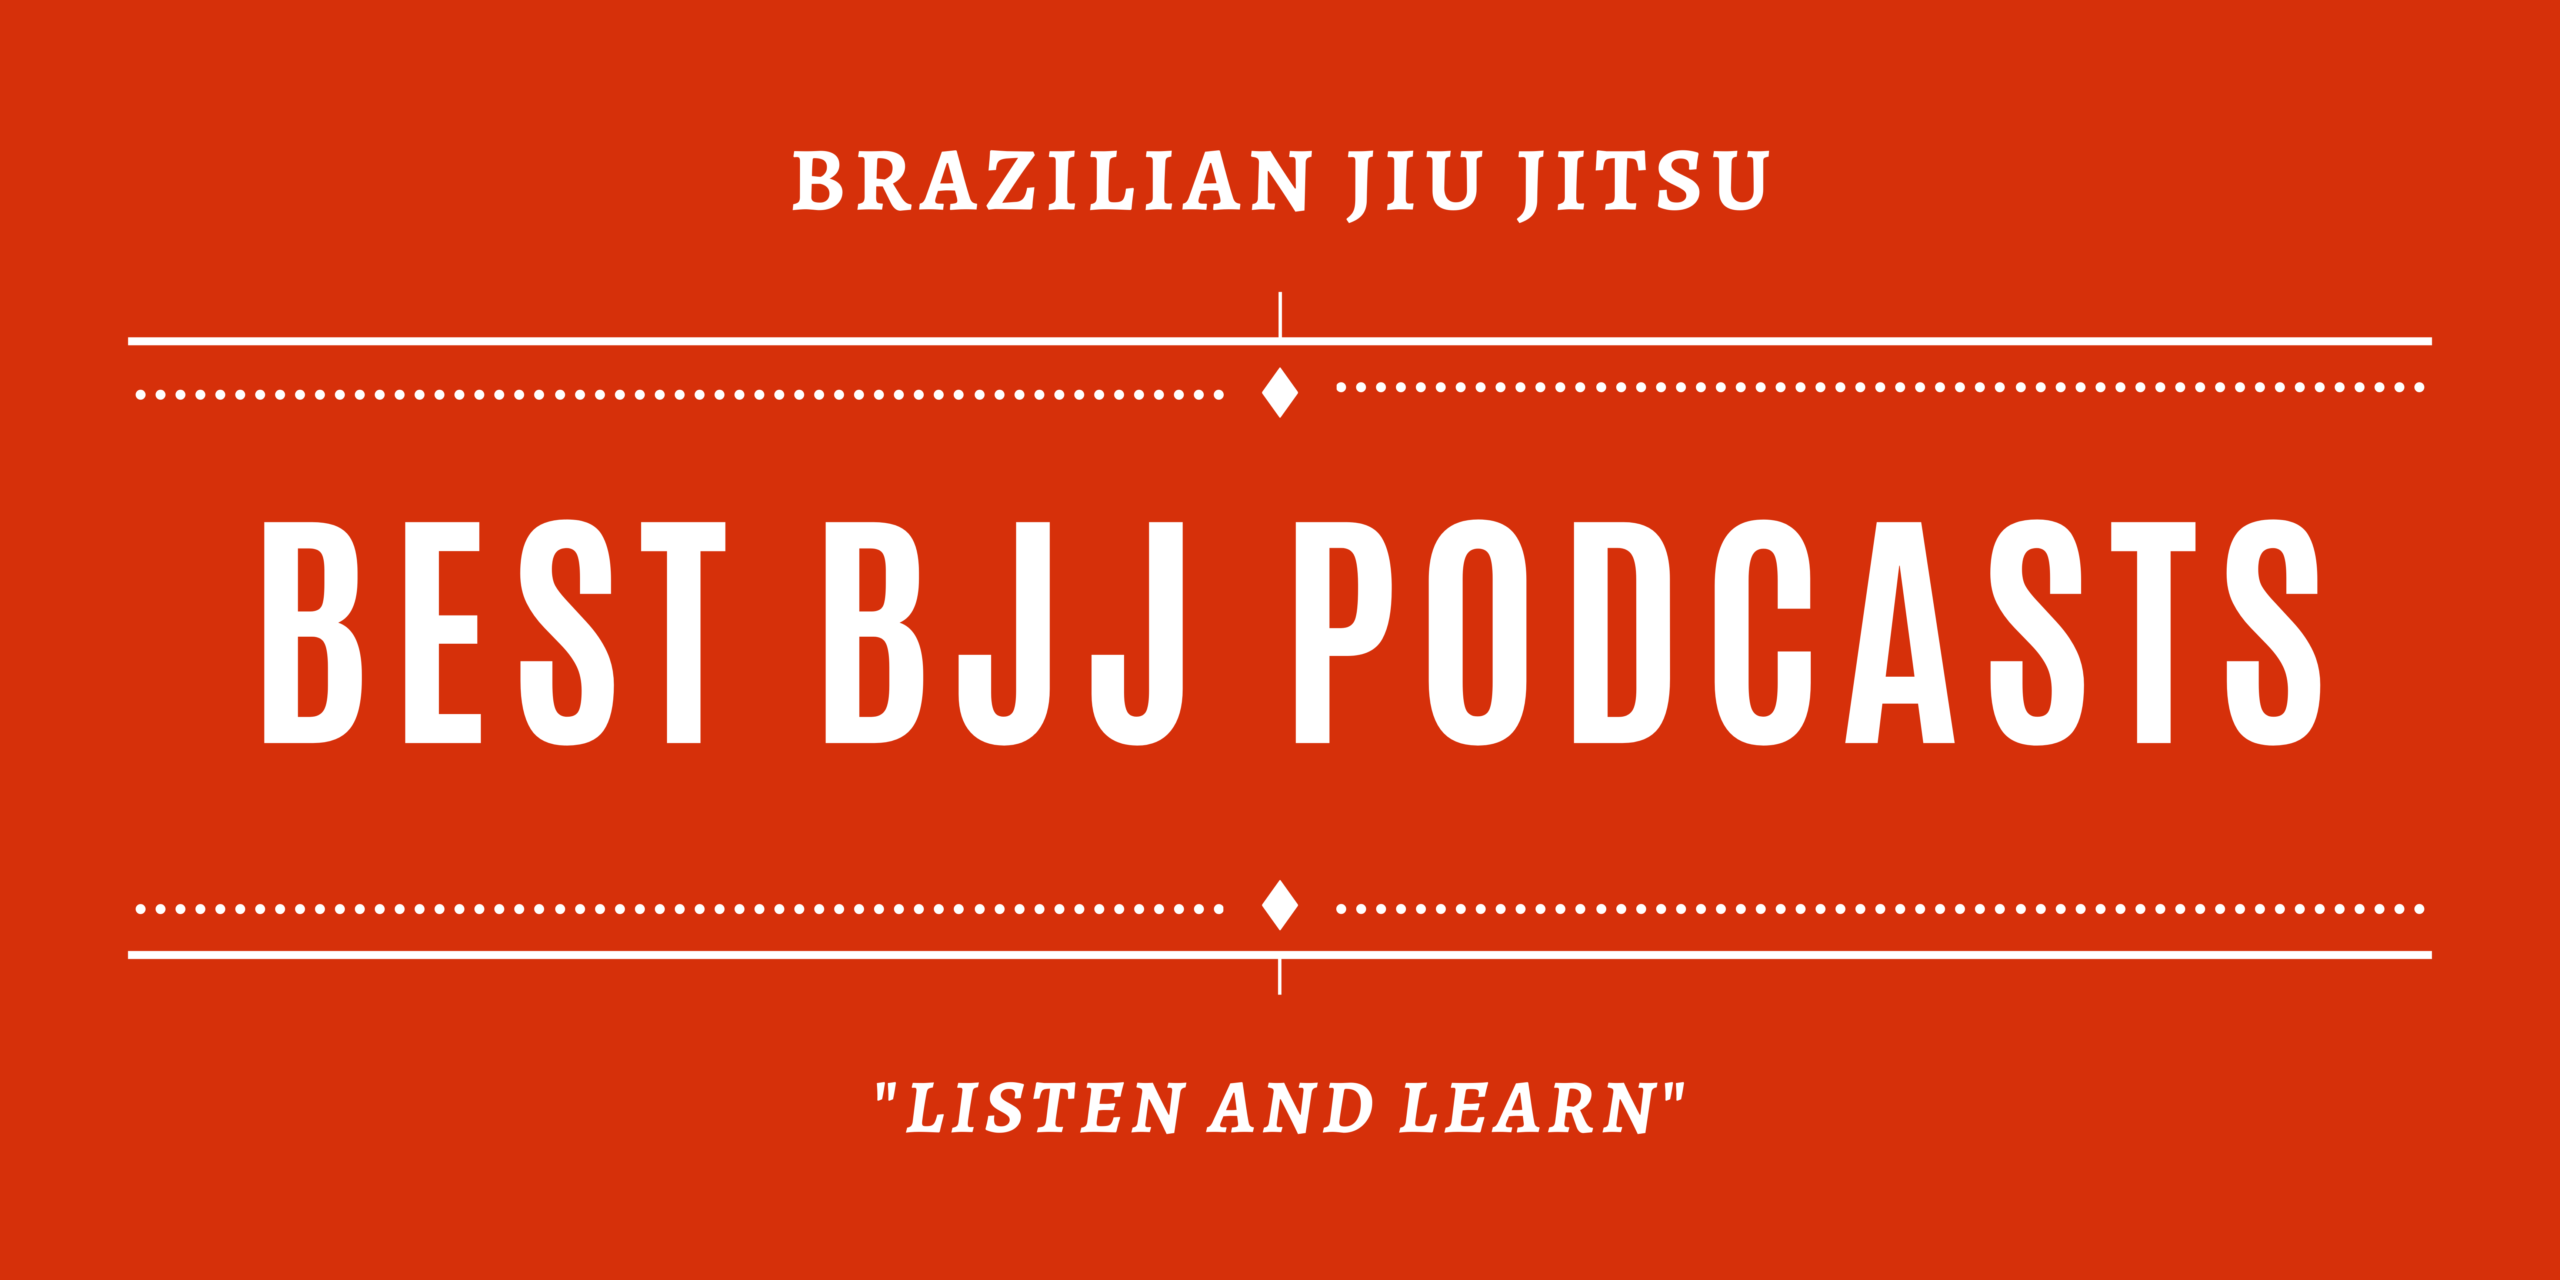 Best BJJ podcasts | 25+ BJJ Podcast Episodes